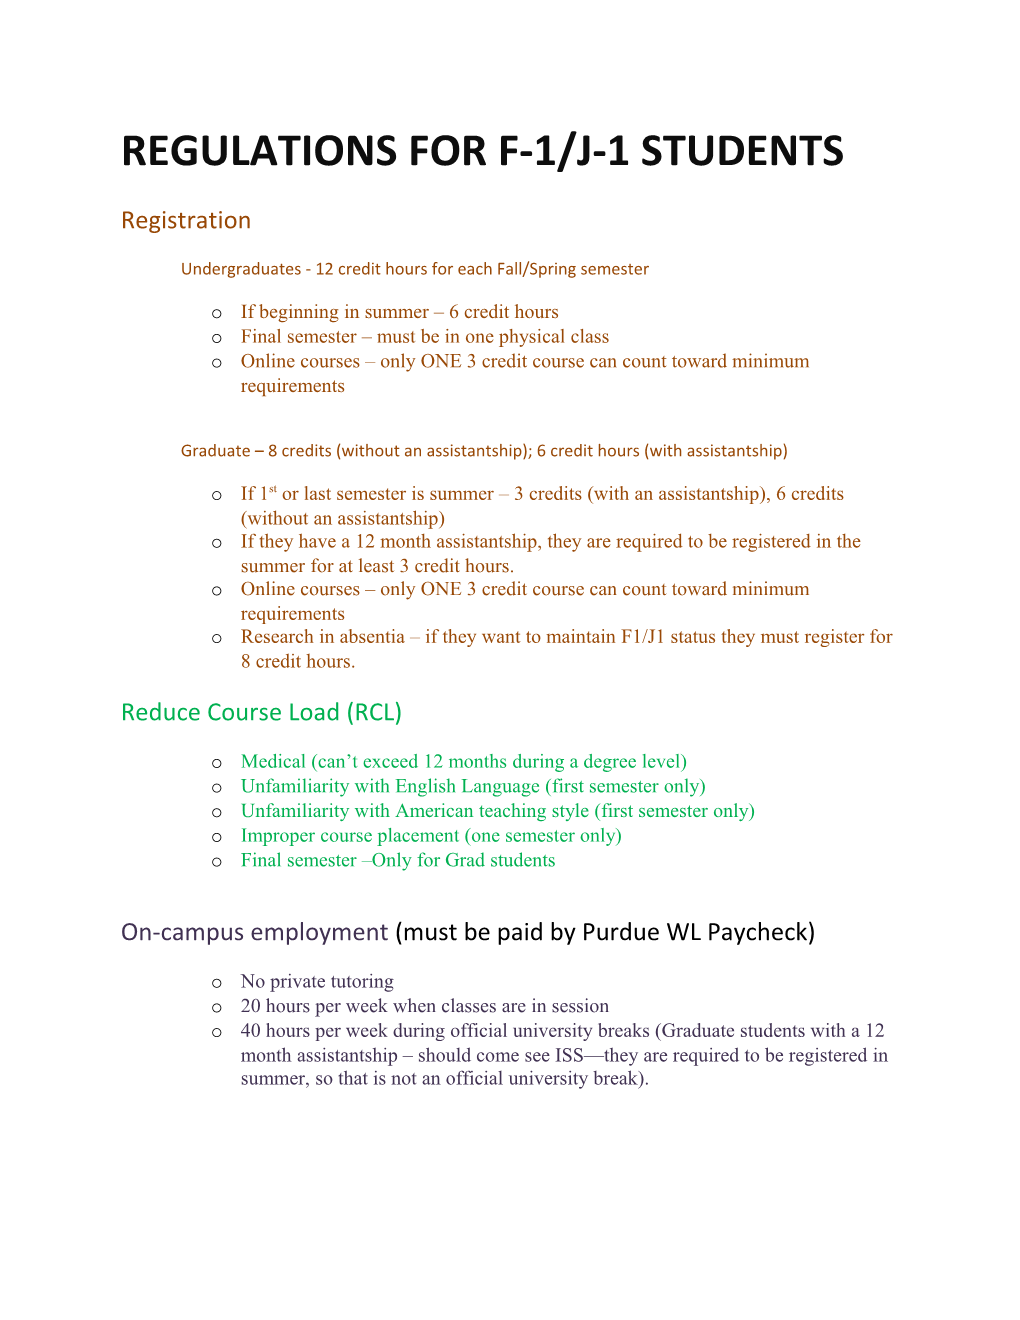 Regulations for F-1/J-1 Students